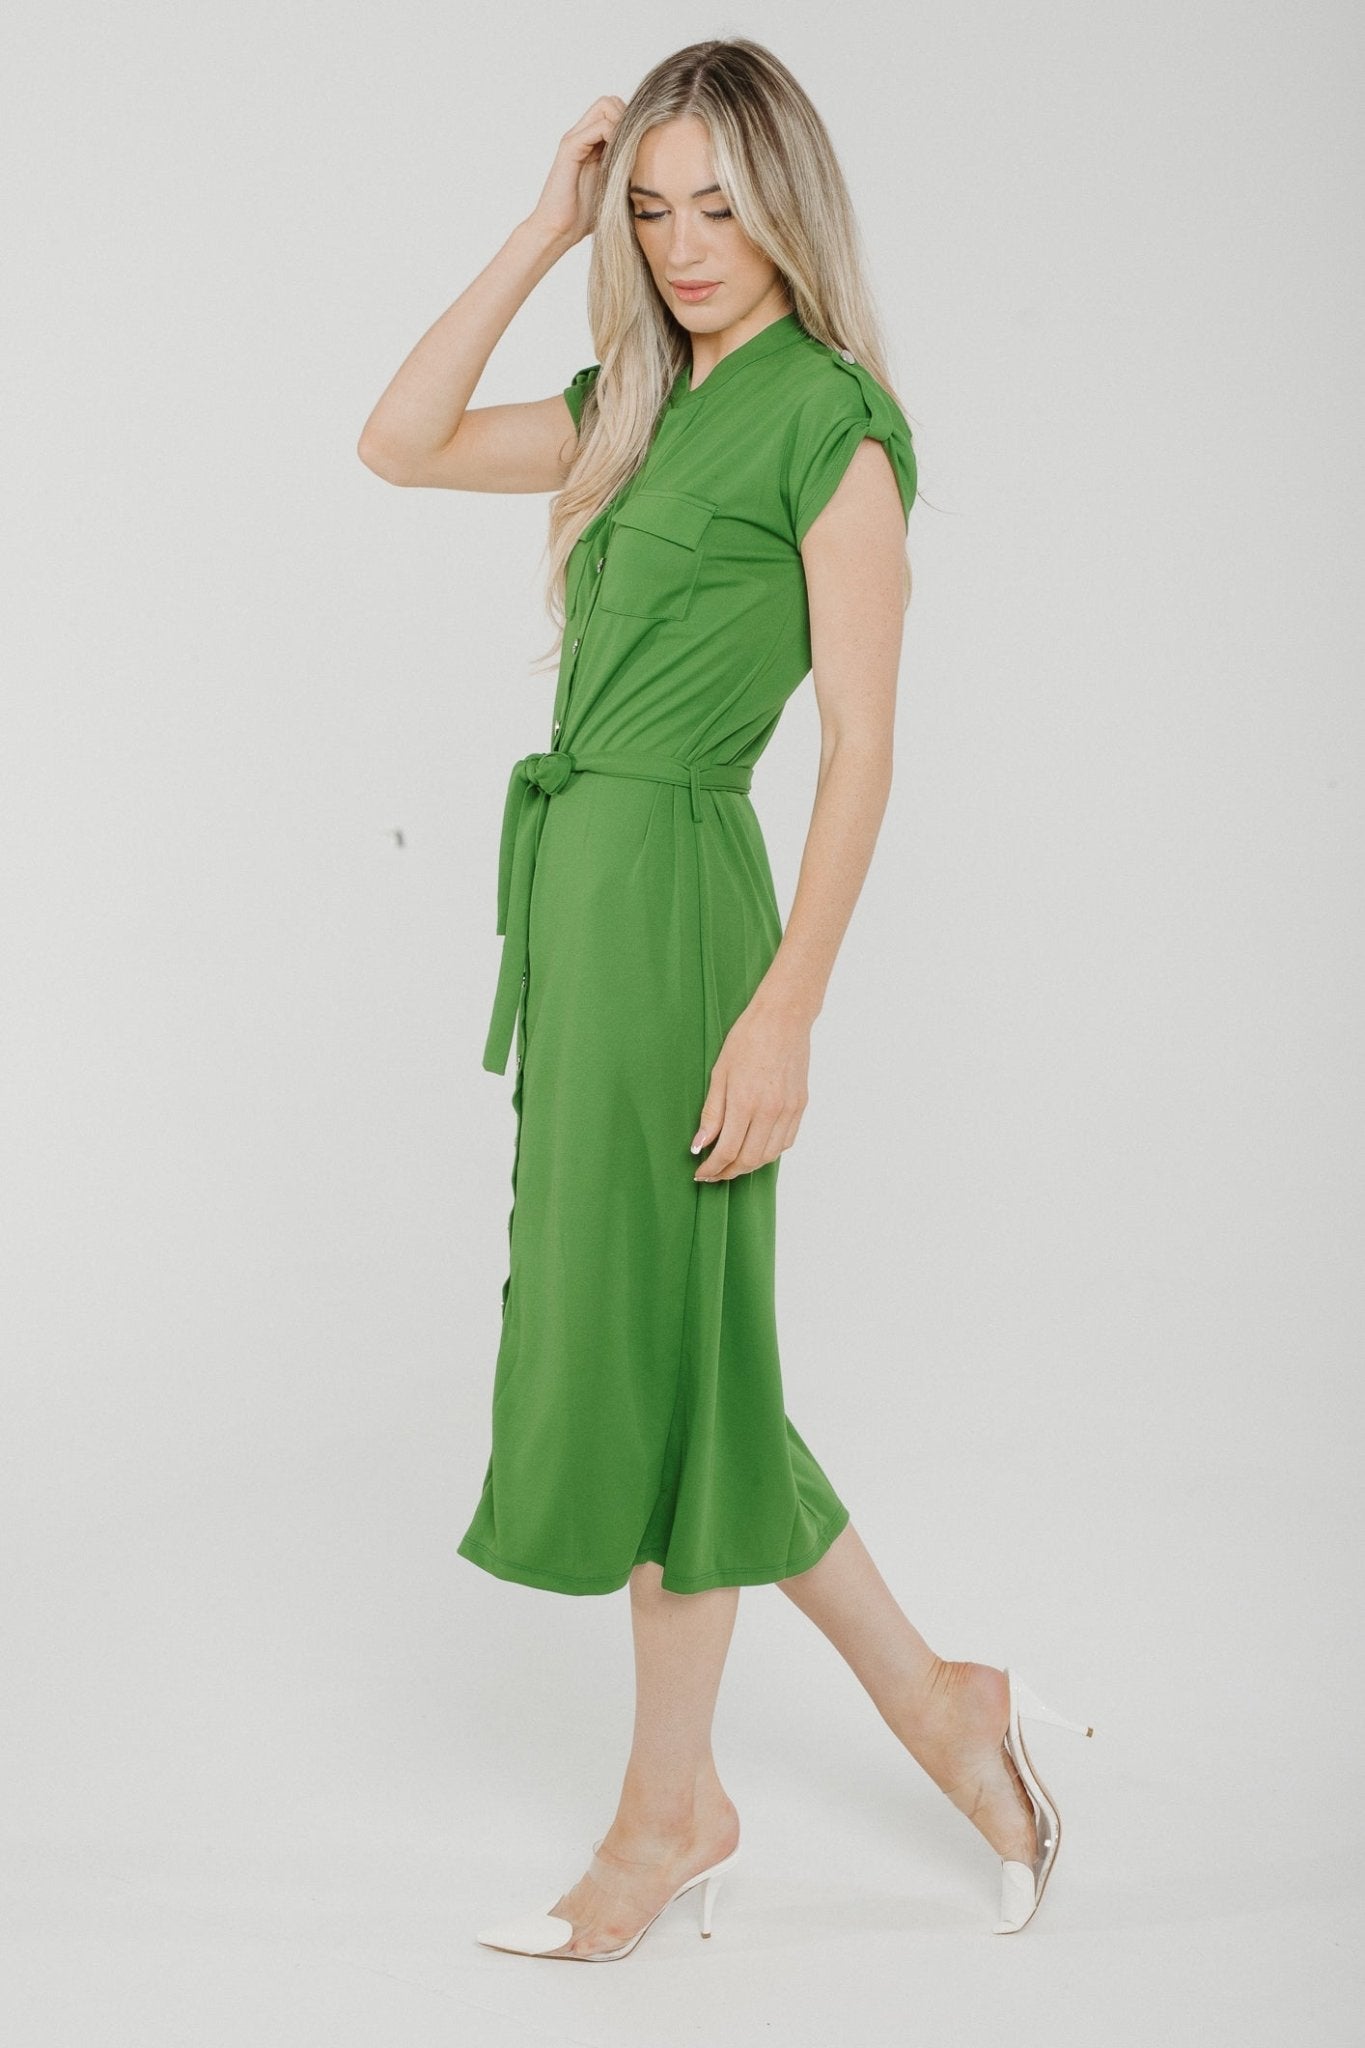 Holly Cap Sleeve Shirt Dress In Green - The Walk in Wardrobe